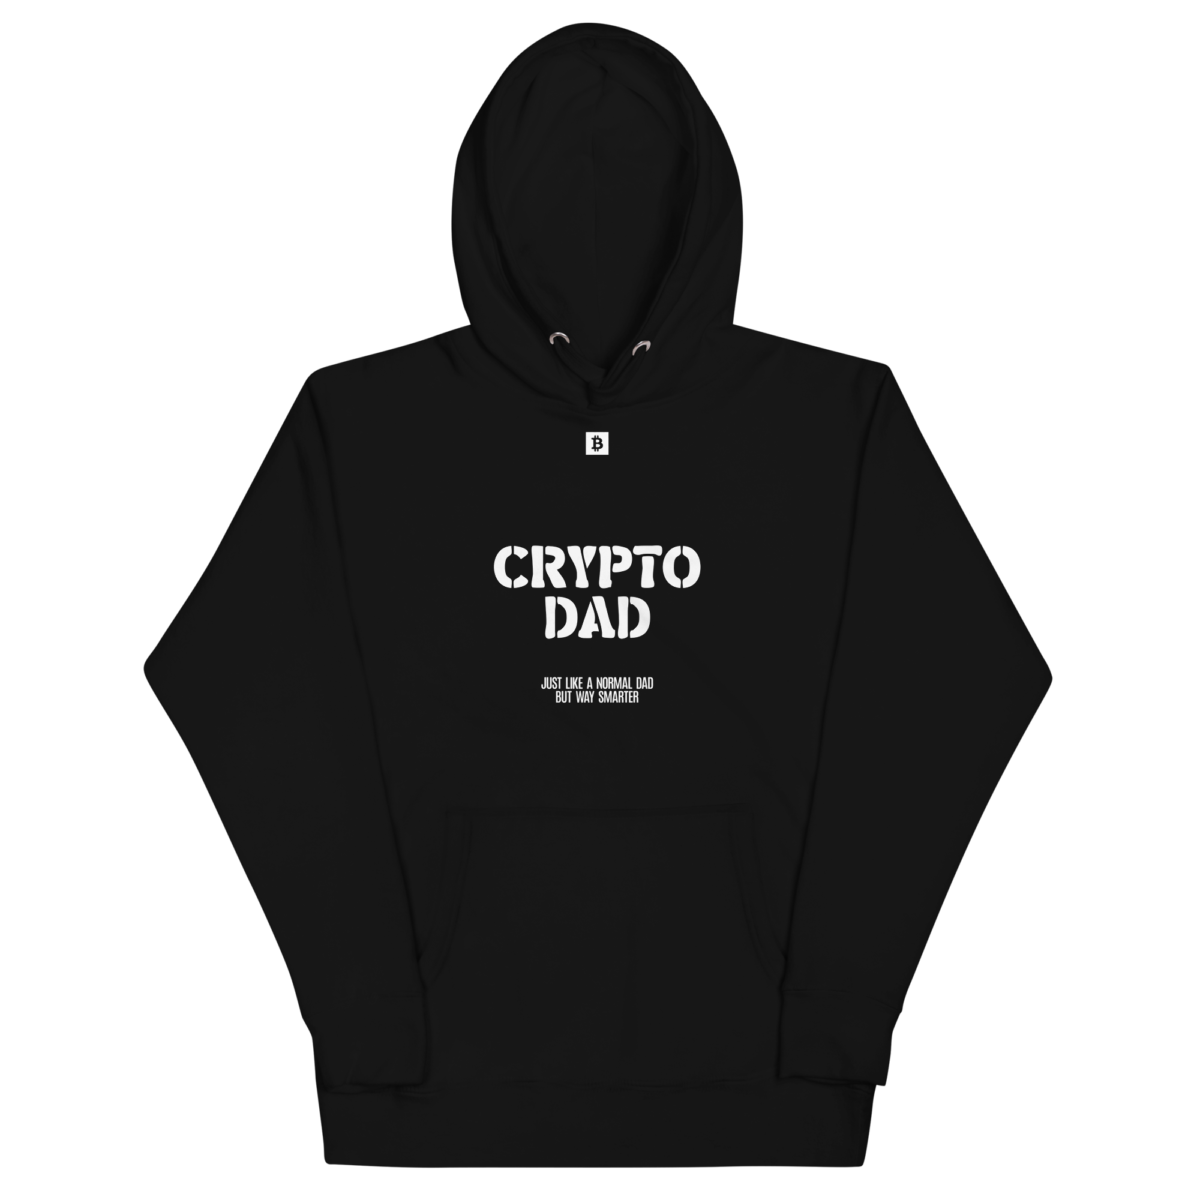 unisex premium hoodie black front 6321f3662c7d5 - Crypto Dad Hoodie